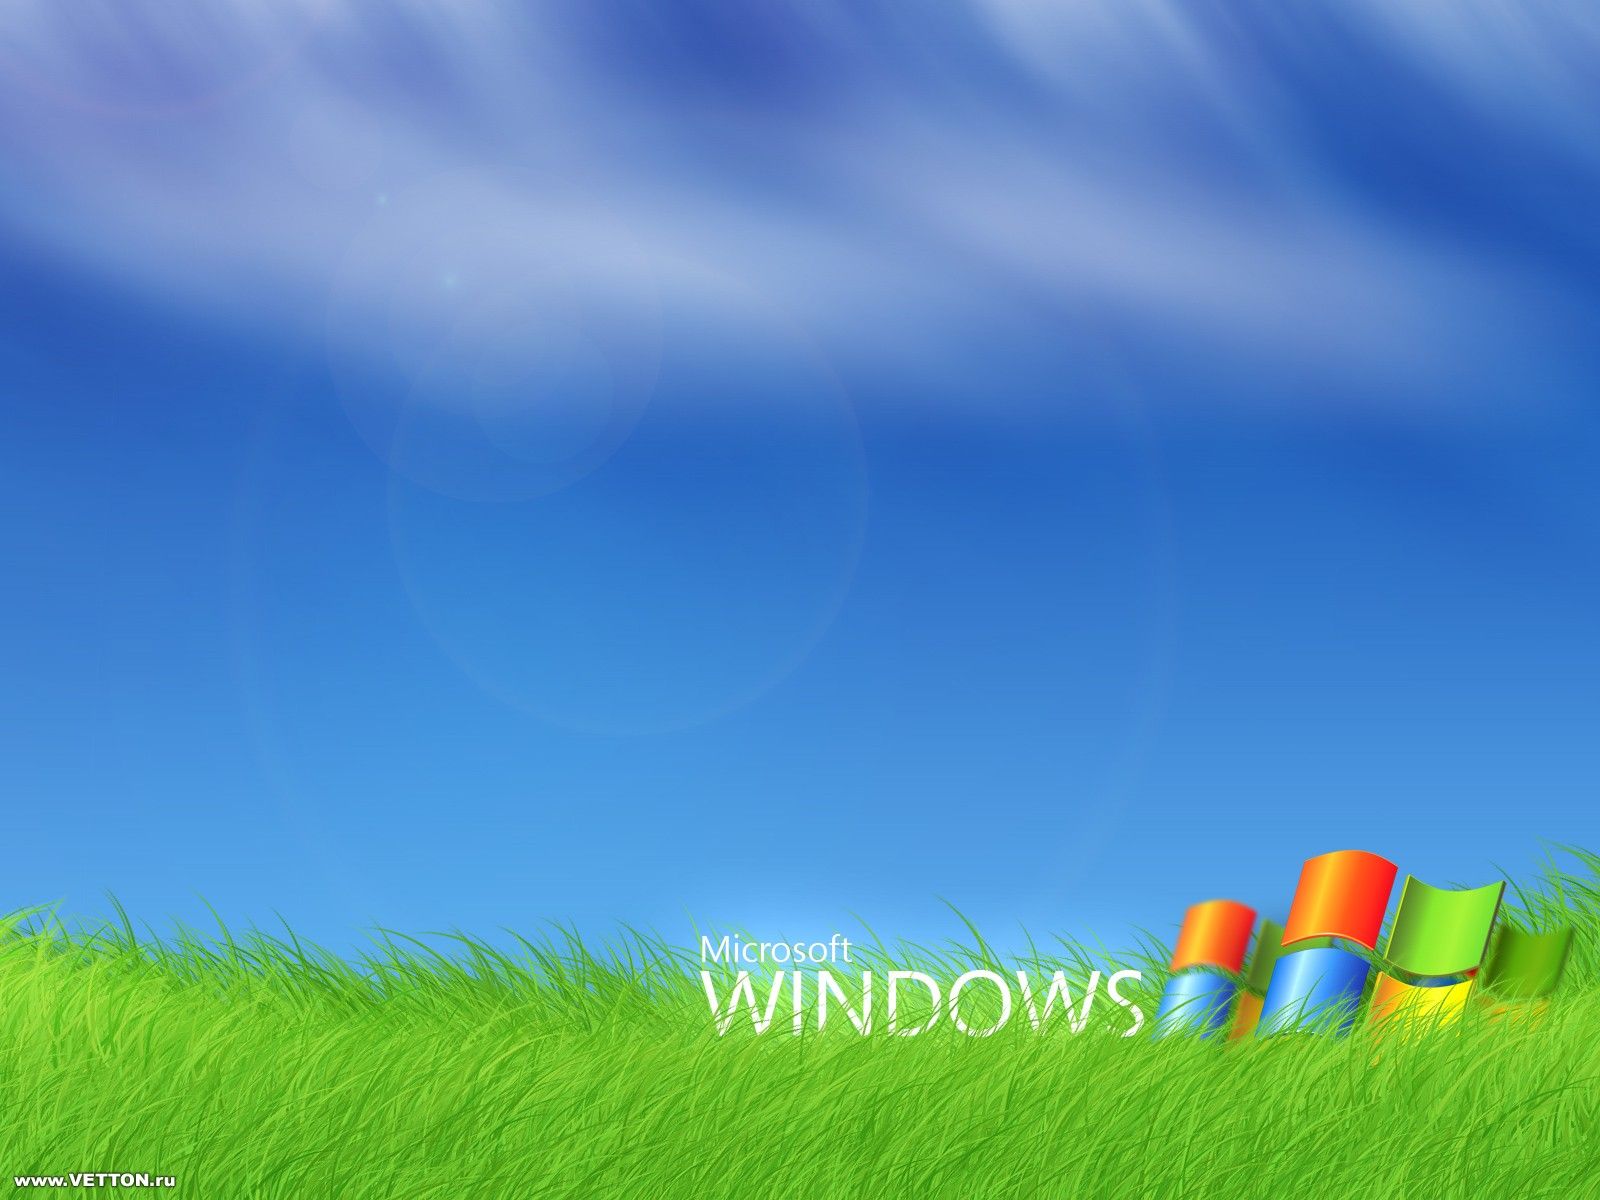 Windows Xp Wallpaper - Downolad Free Full HD Backgrounds